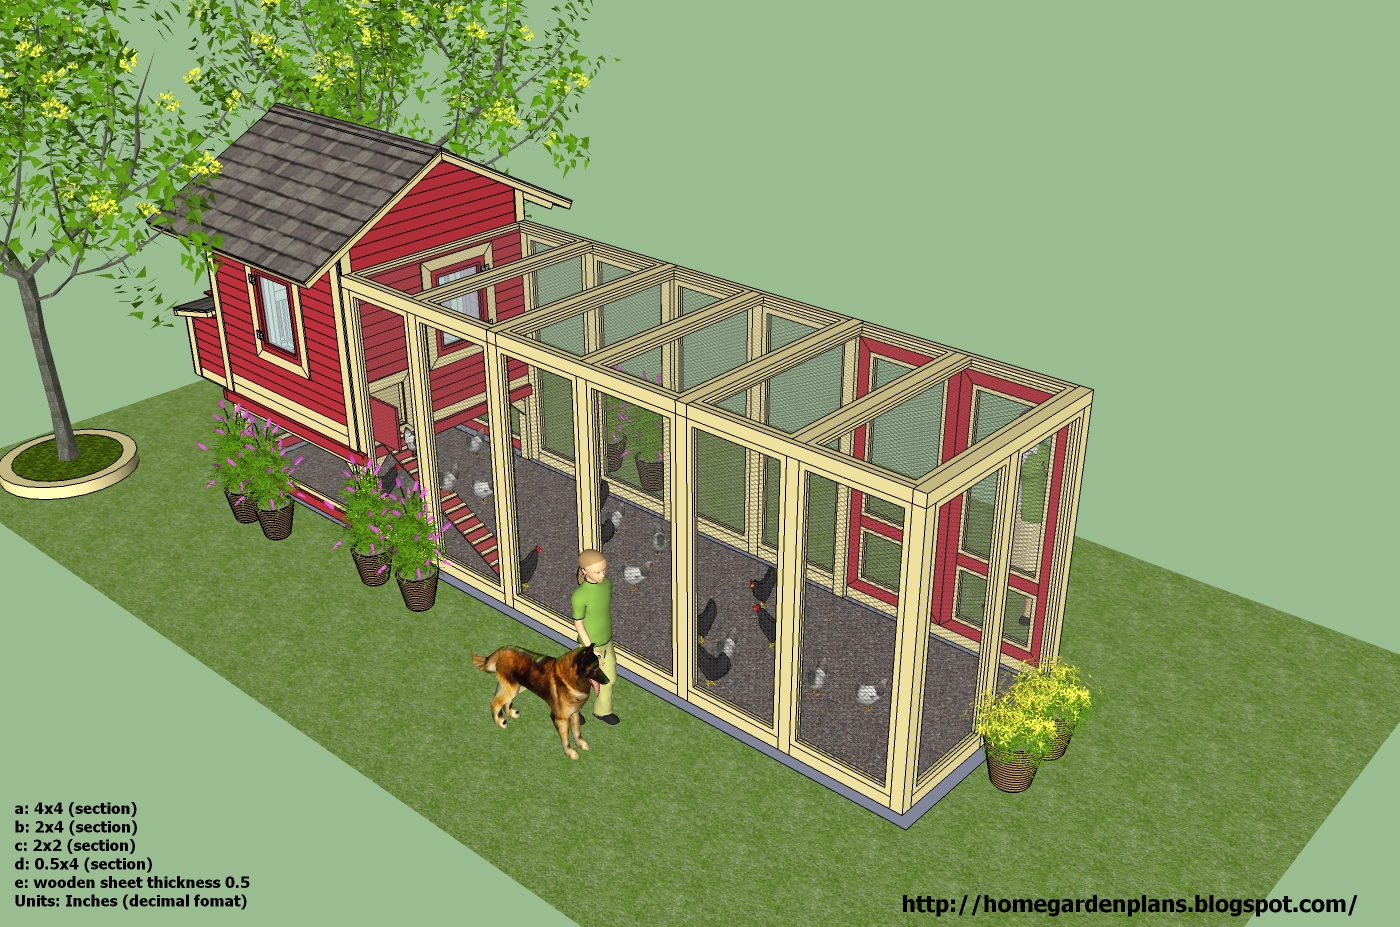 Home Garden Plans: L102 - Chicken Coop Plans Construction ...